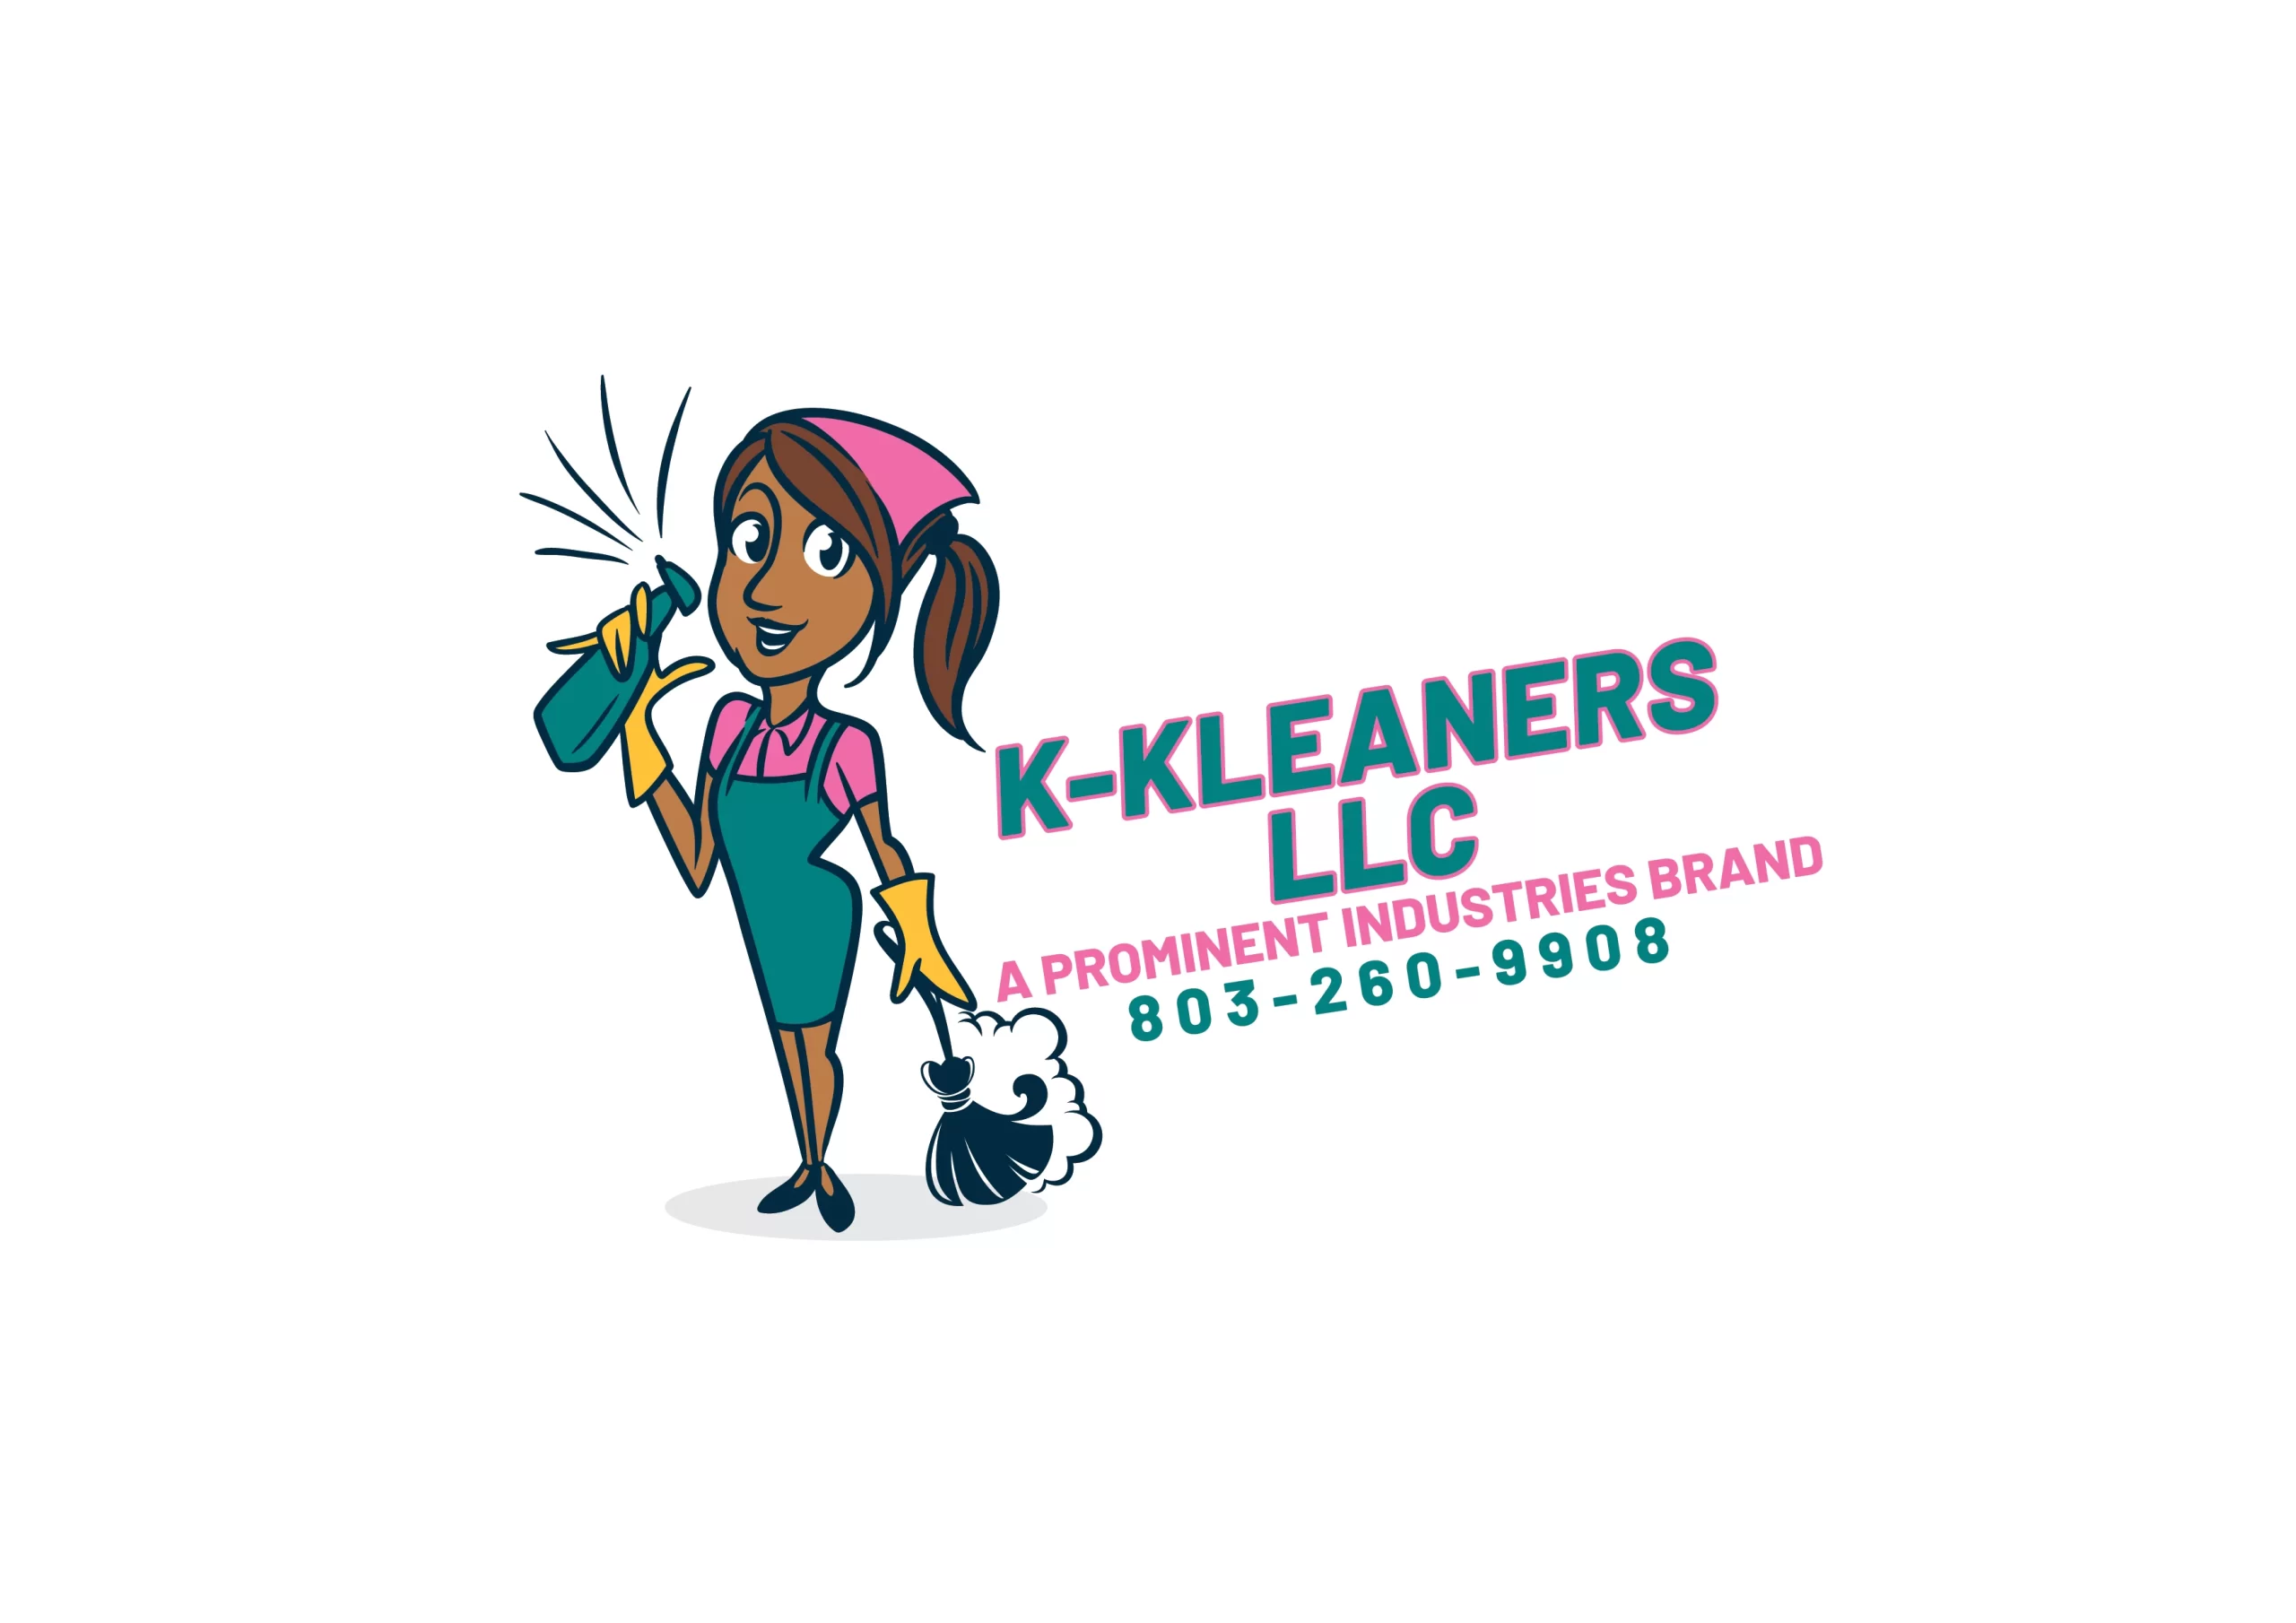 K-kleaners LLC